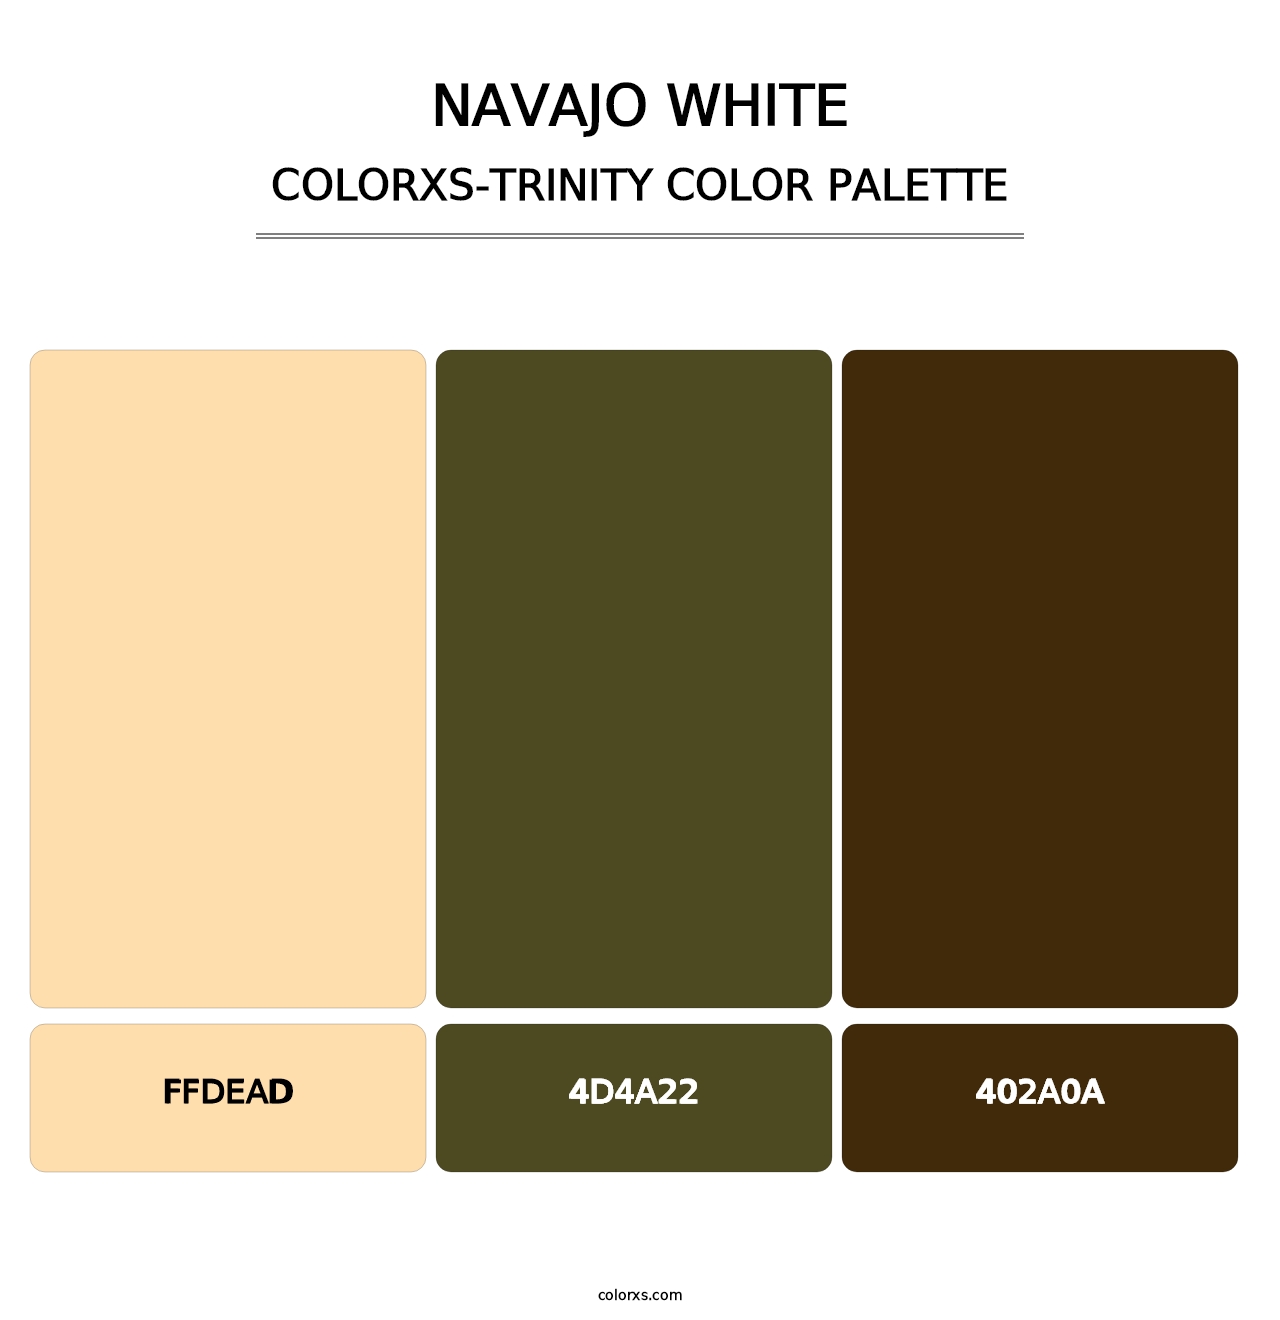 Navajo White - Colorxs Trinity Palette